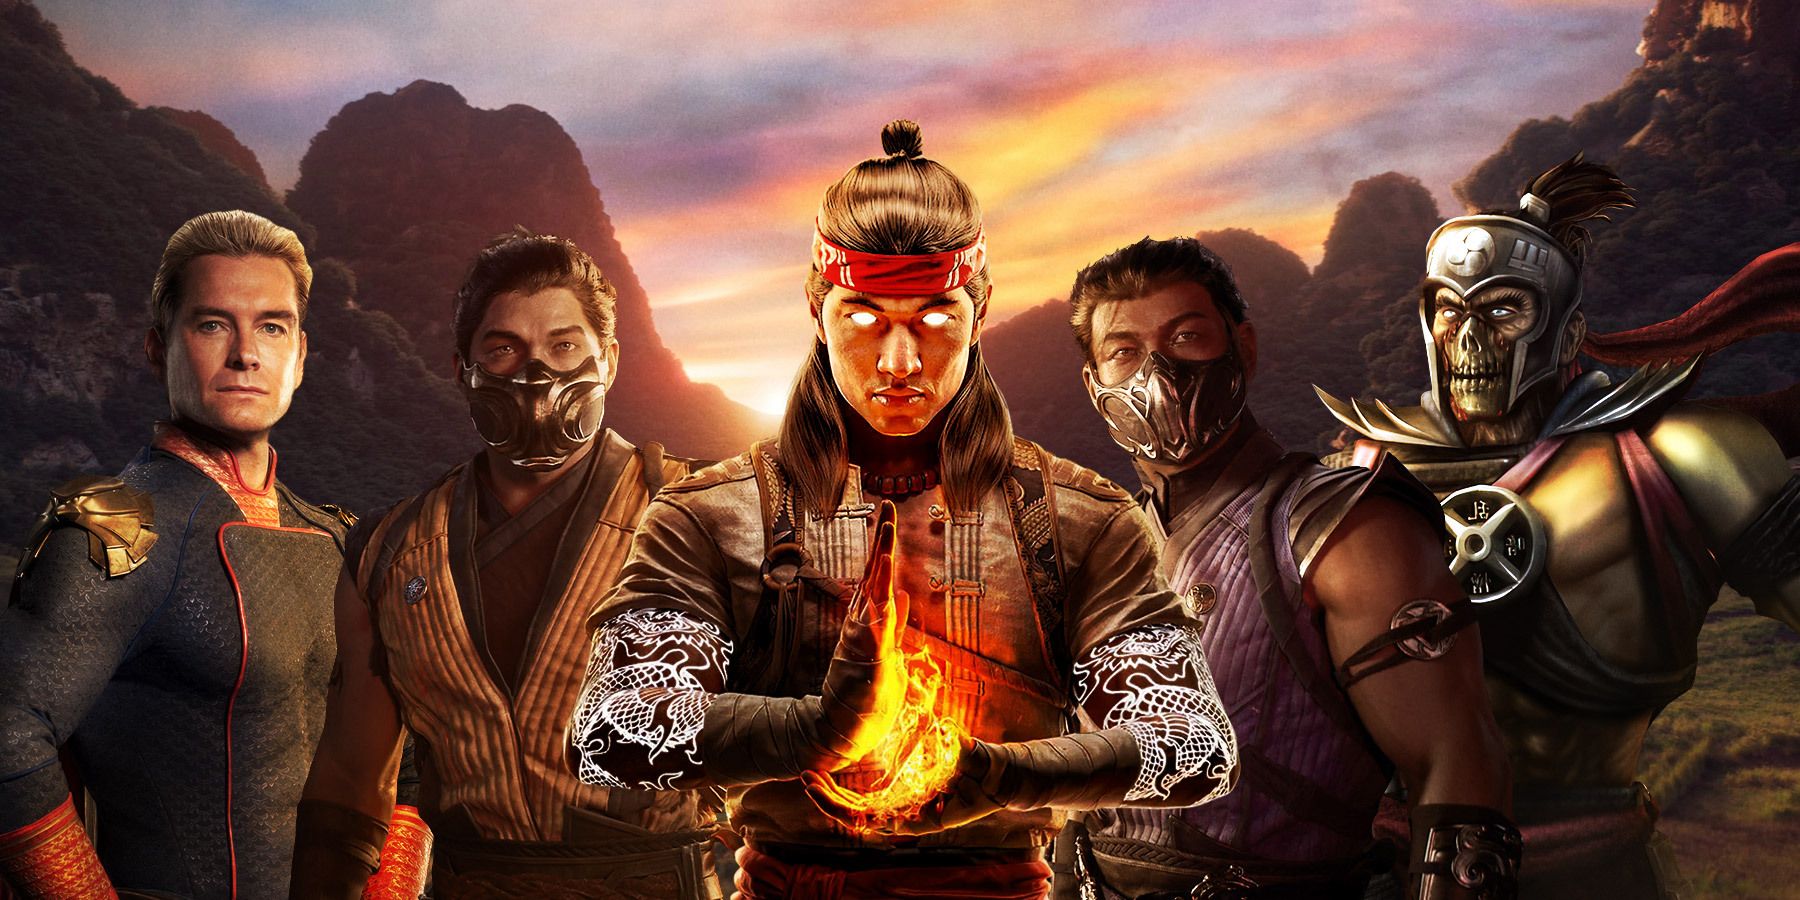 Mortal Kombat 1 DLC leaks are here! #mortalkombat #mortalkombat11 #mor